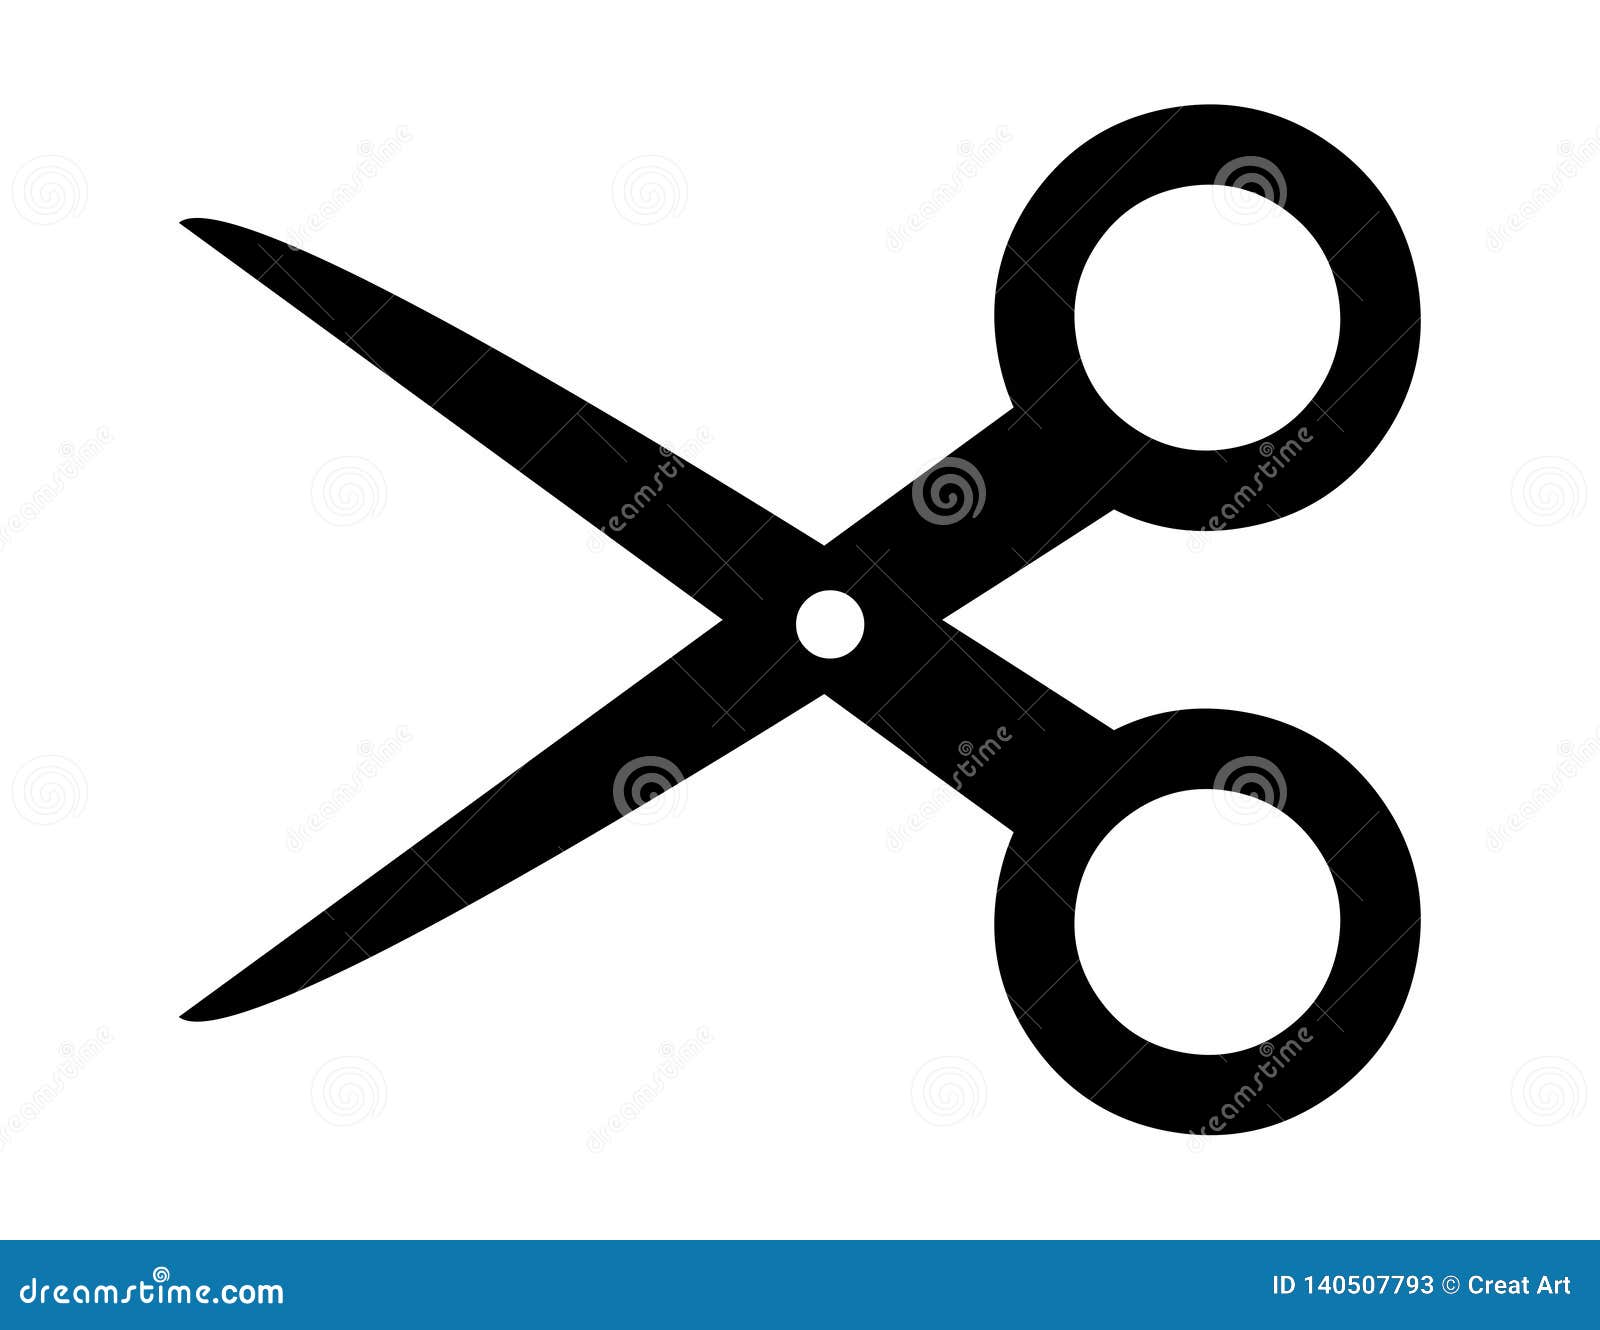 scissors  icon logo